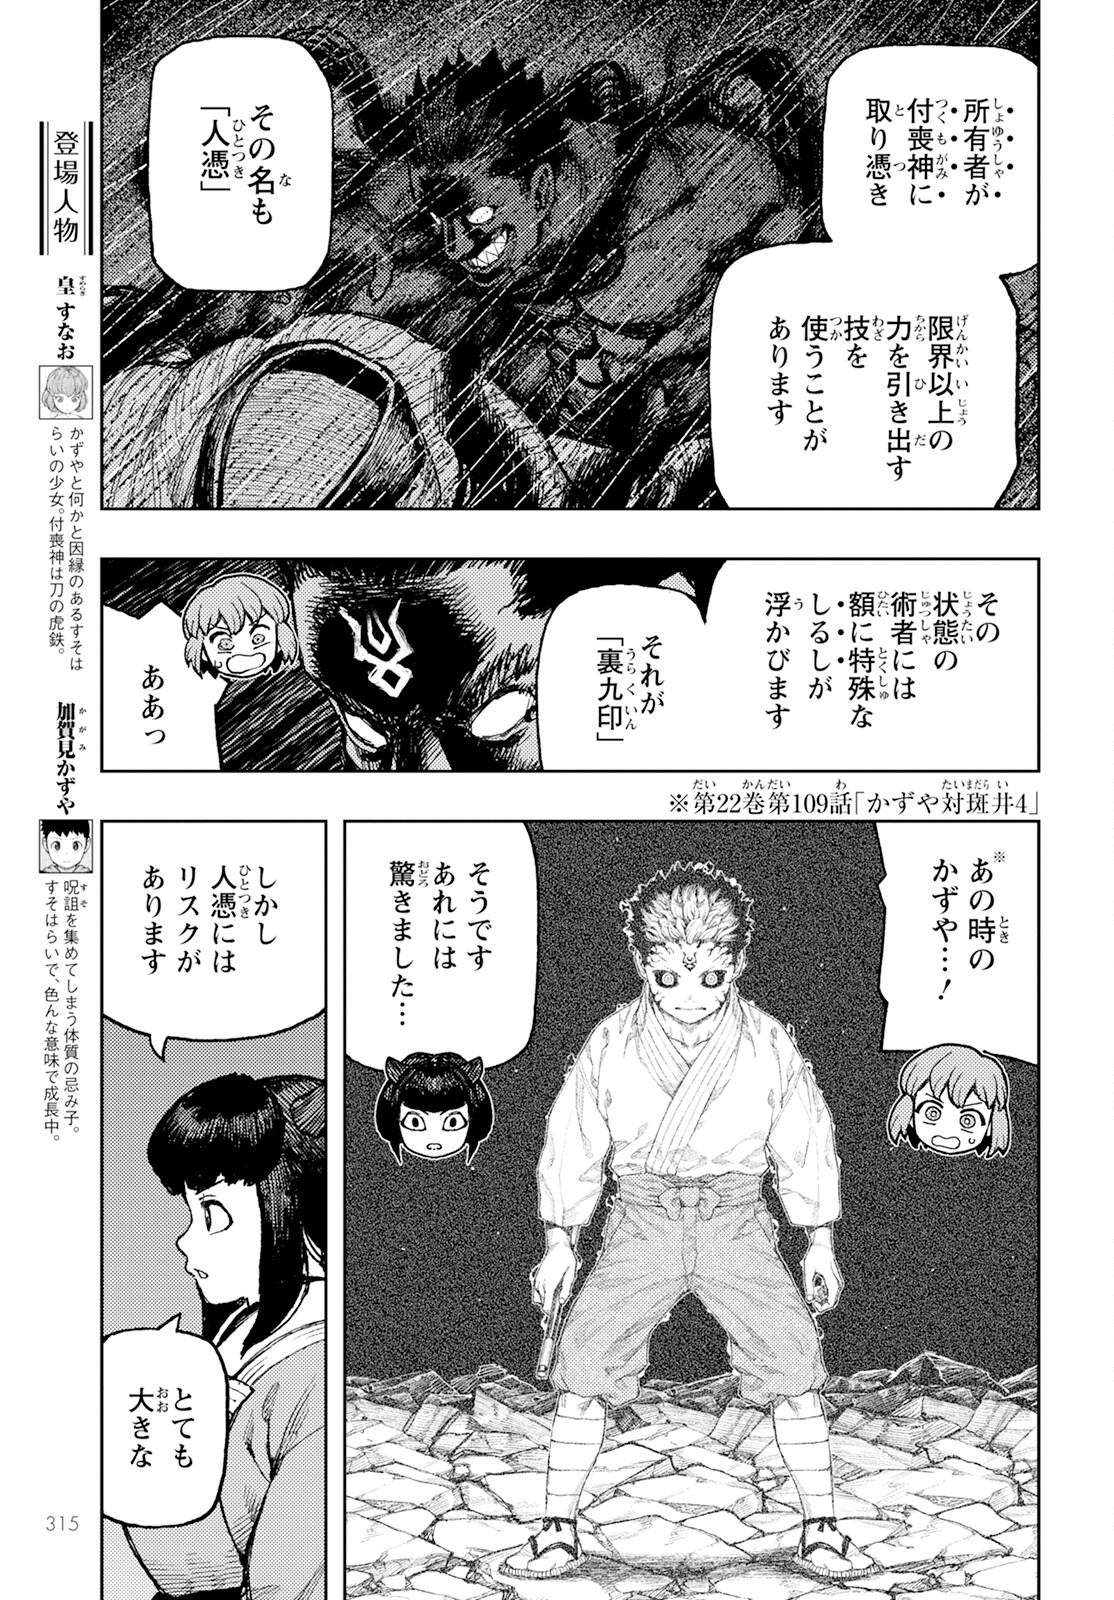 Tsugumomo - Chapter 163 - Page 3